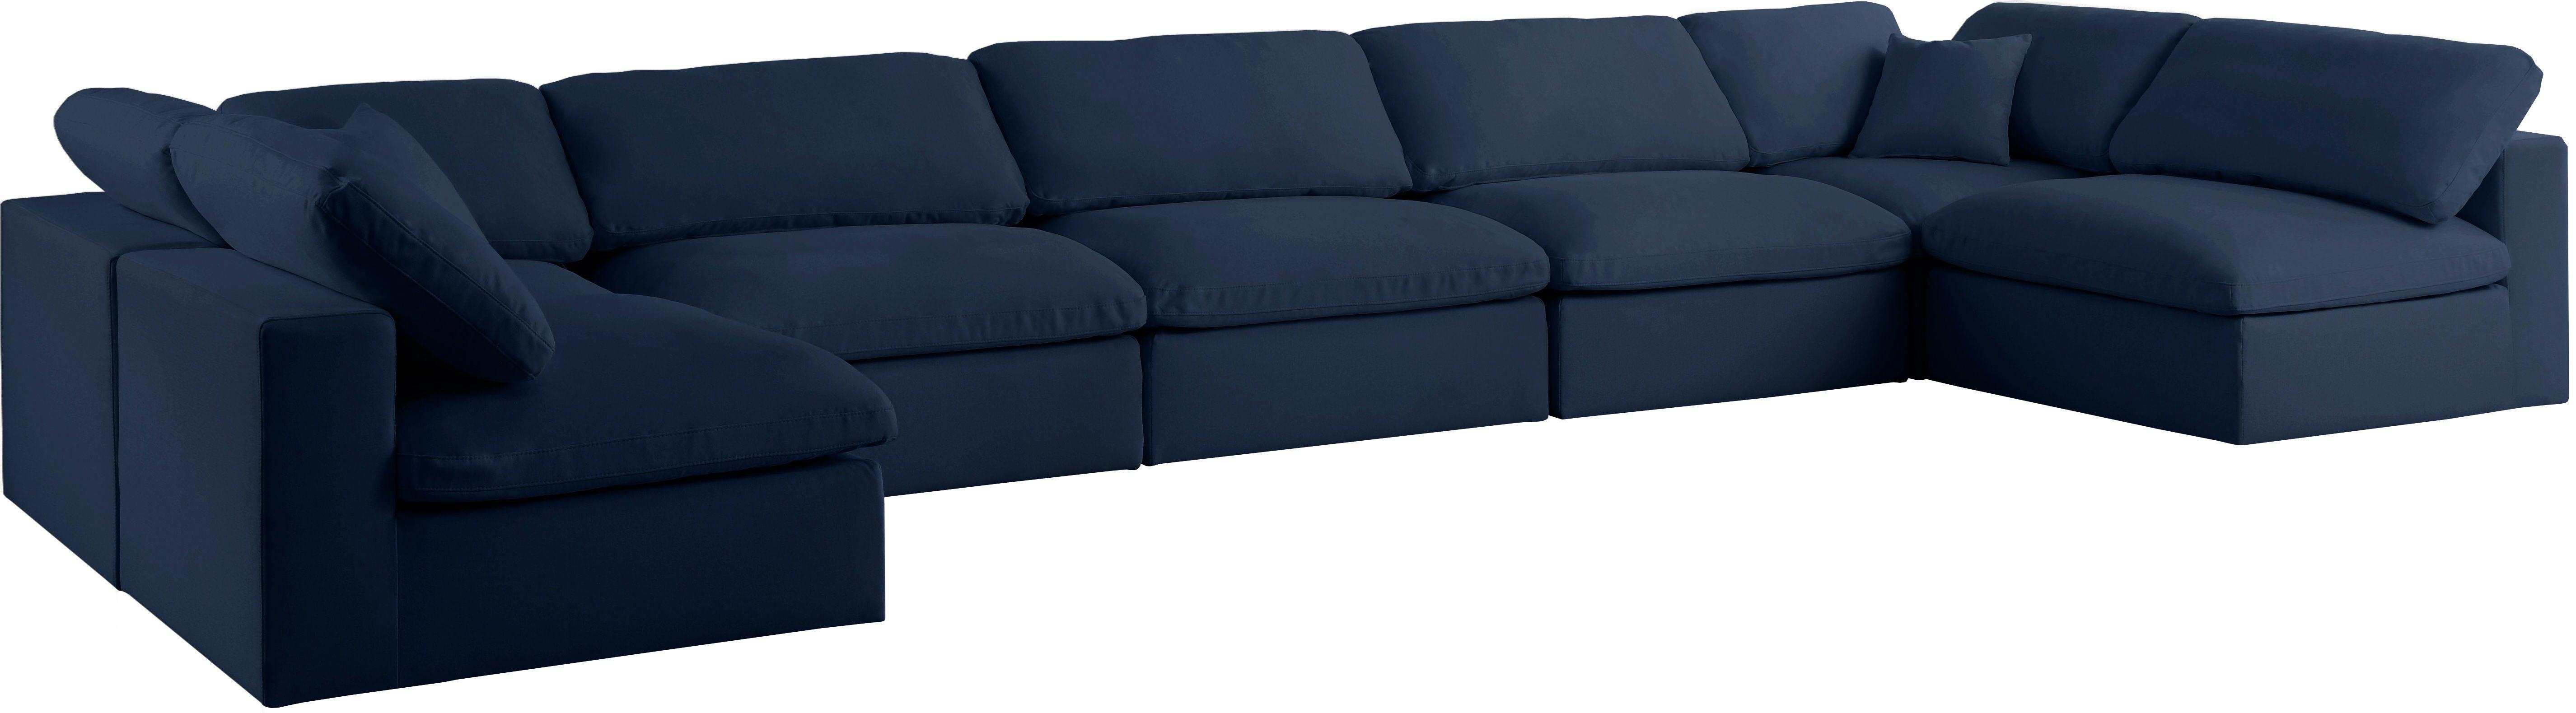 Meridian Furniture - Serene - Linen Textured Fabric Deluxe Comfort Modular Sectional 7 Piece - Navy - 5th Avenue Furniture